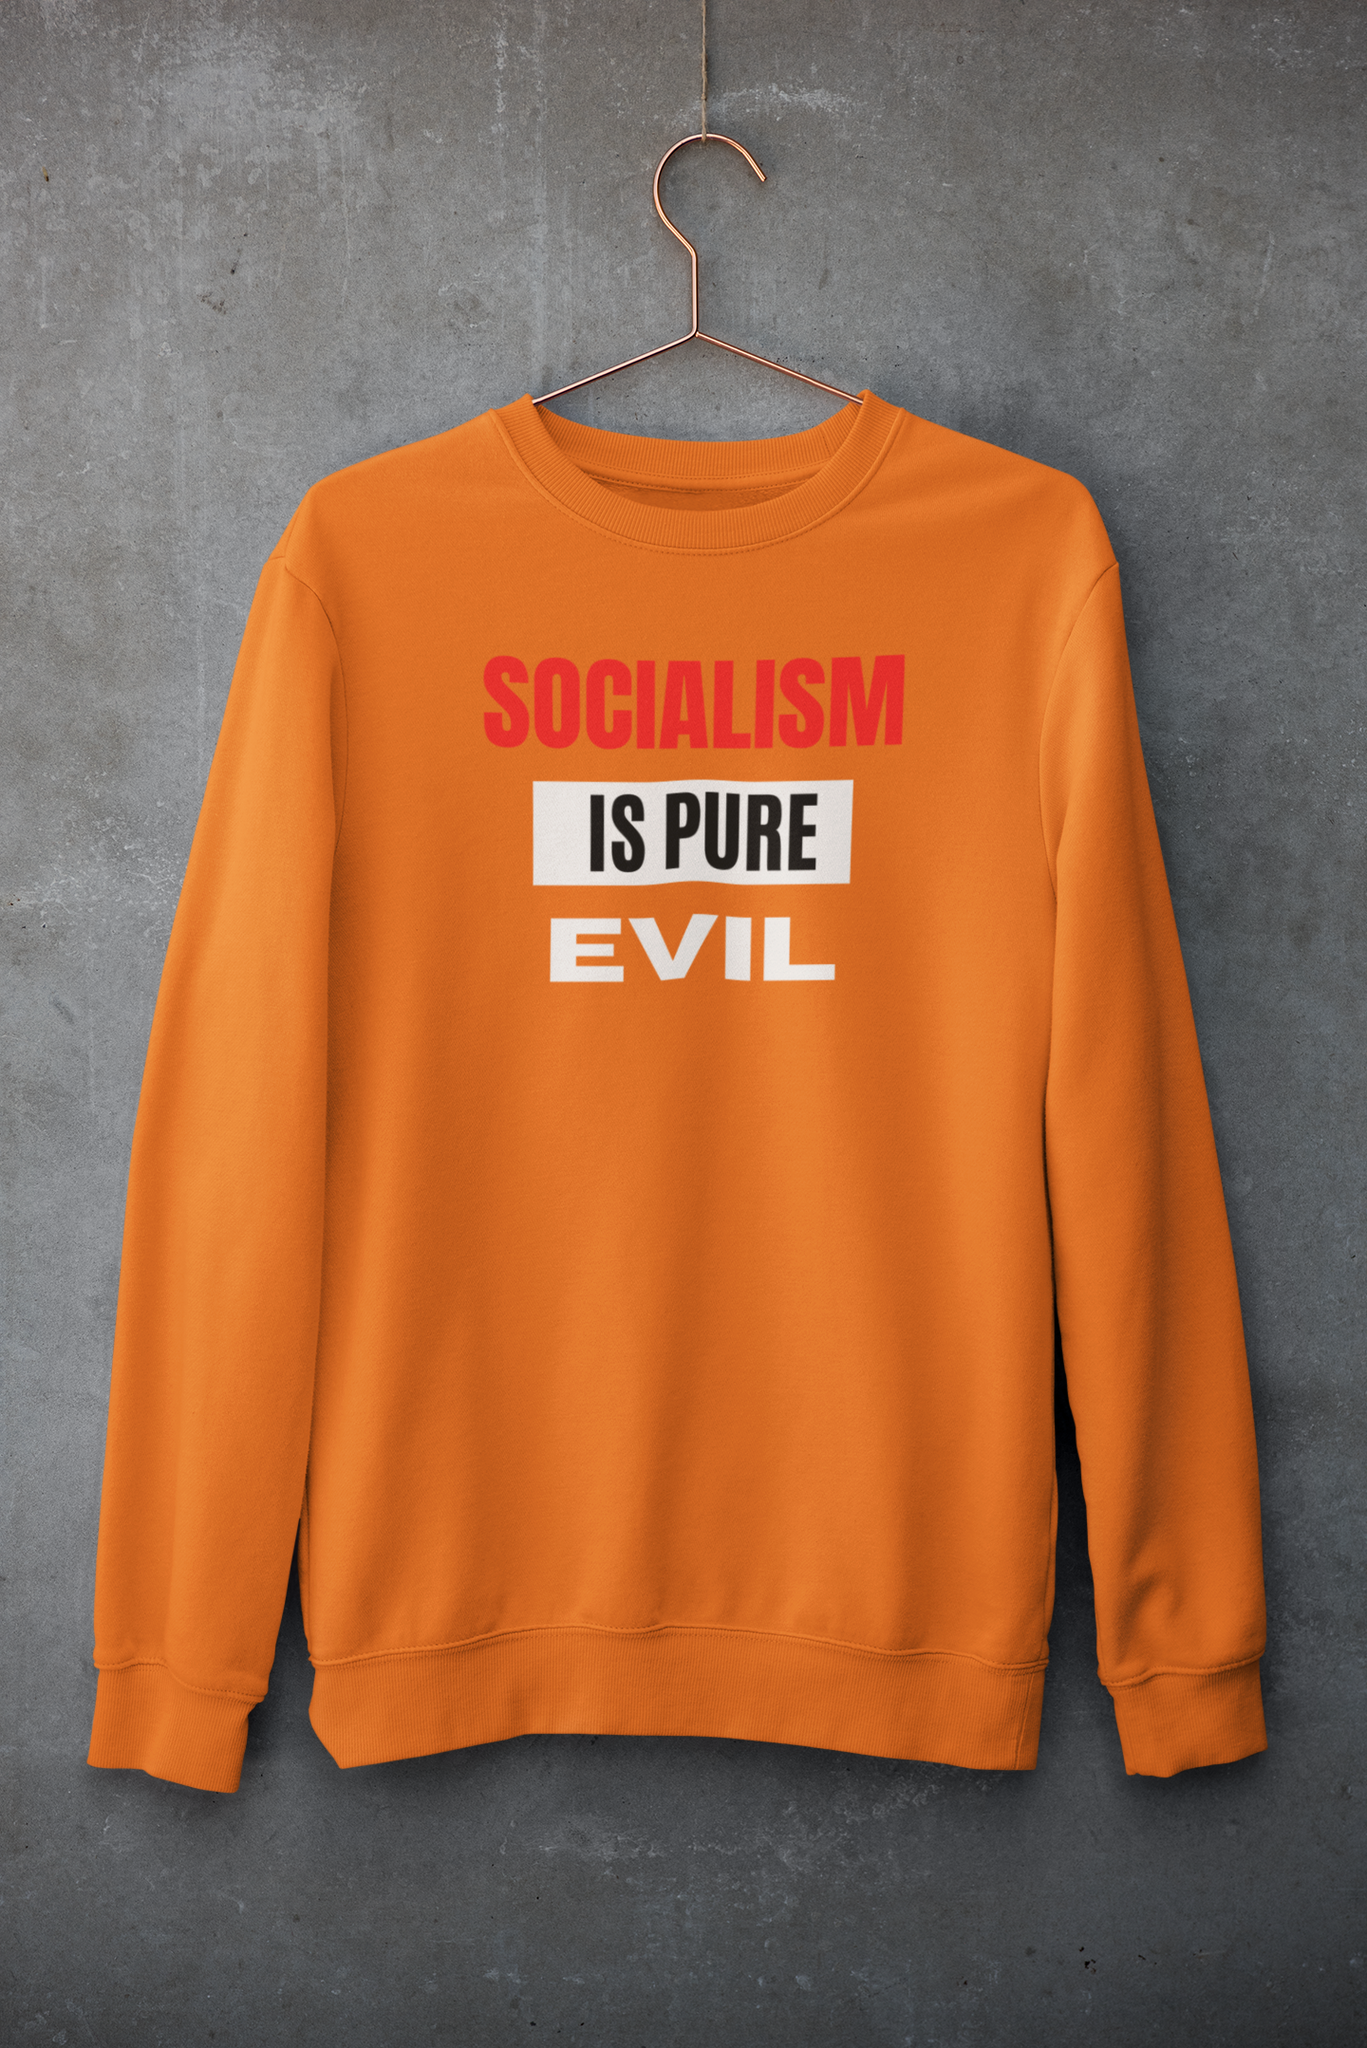 Socialism Is Pure Evil Sweatshirt Unisex